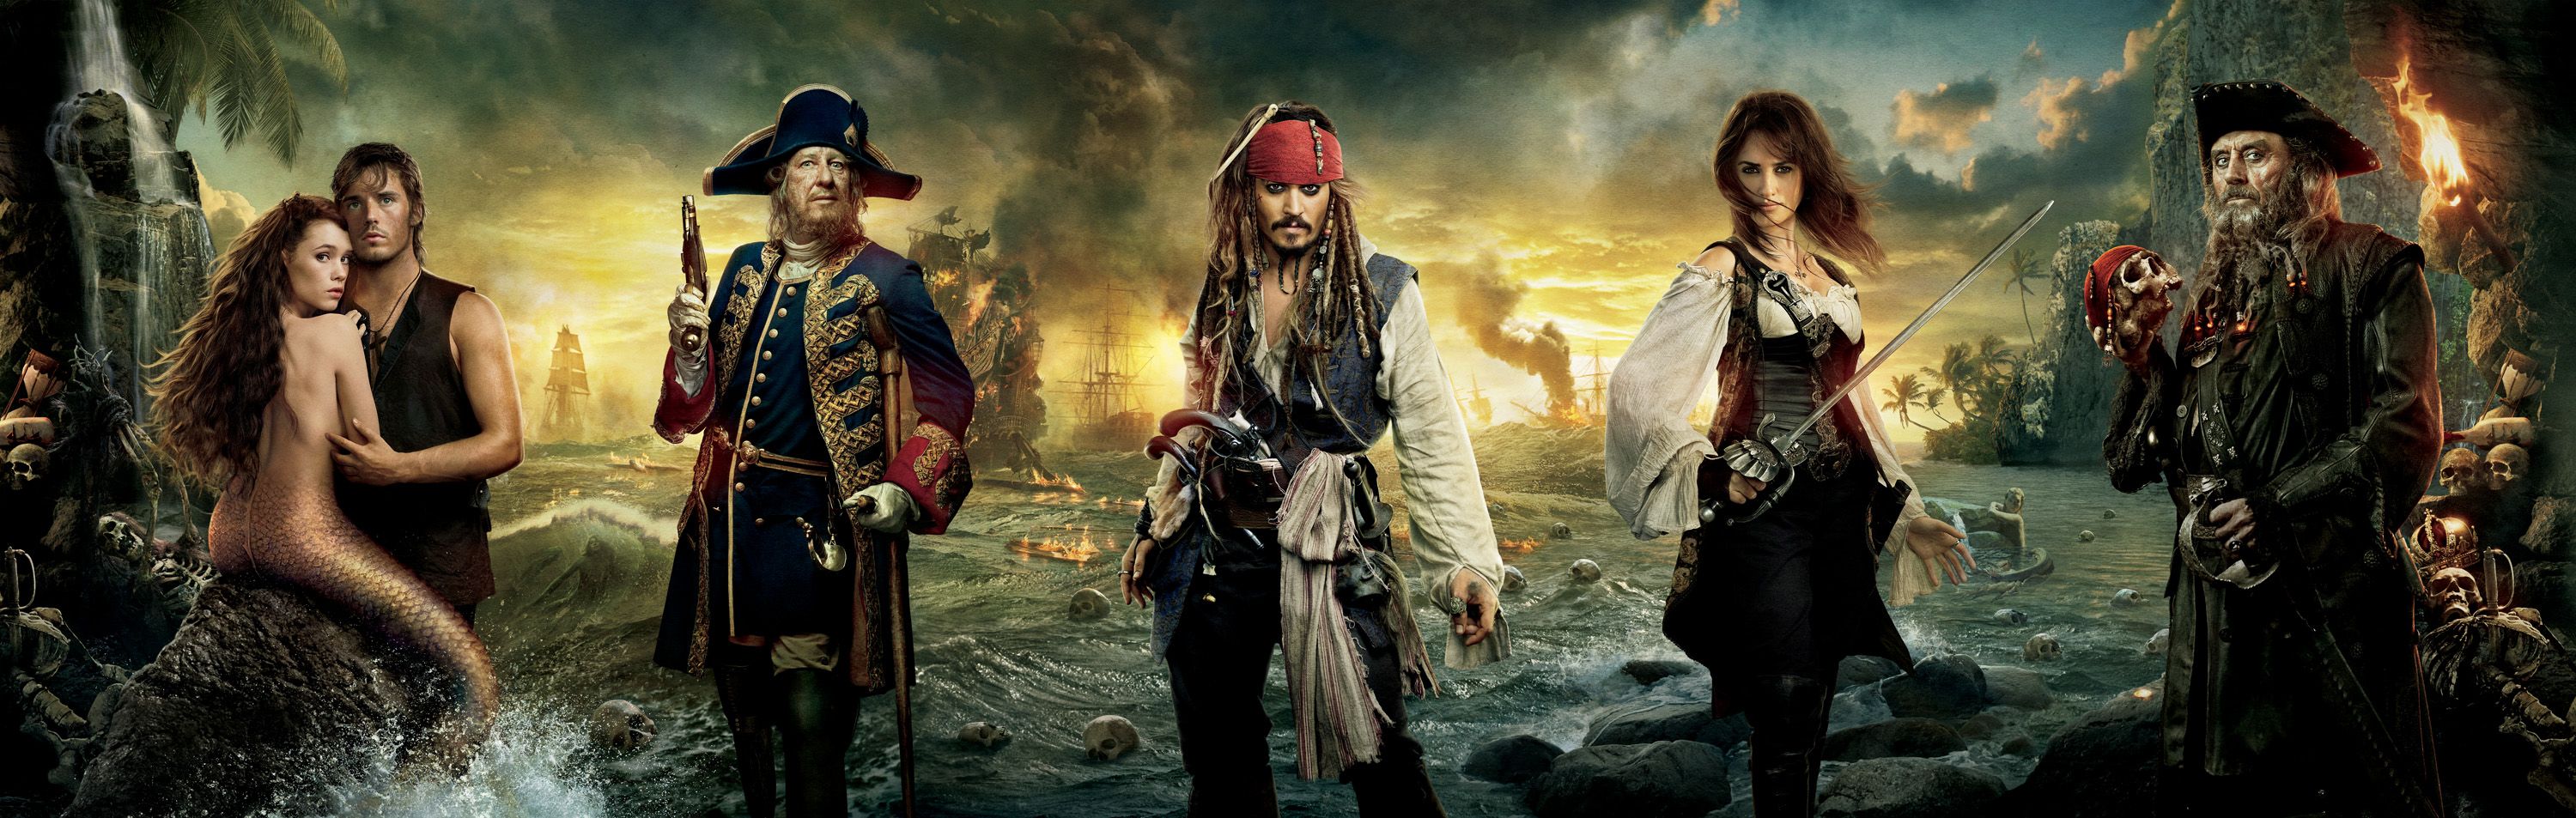 Piratas das caraibas filmes torrent peliculas representativas del cine latinoamericano torrent